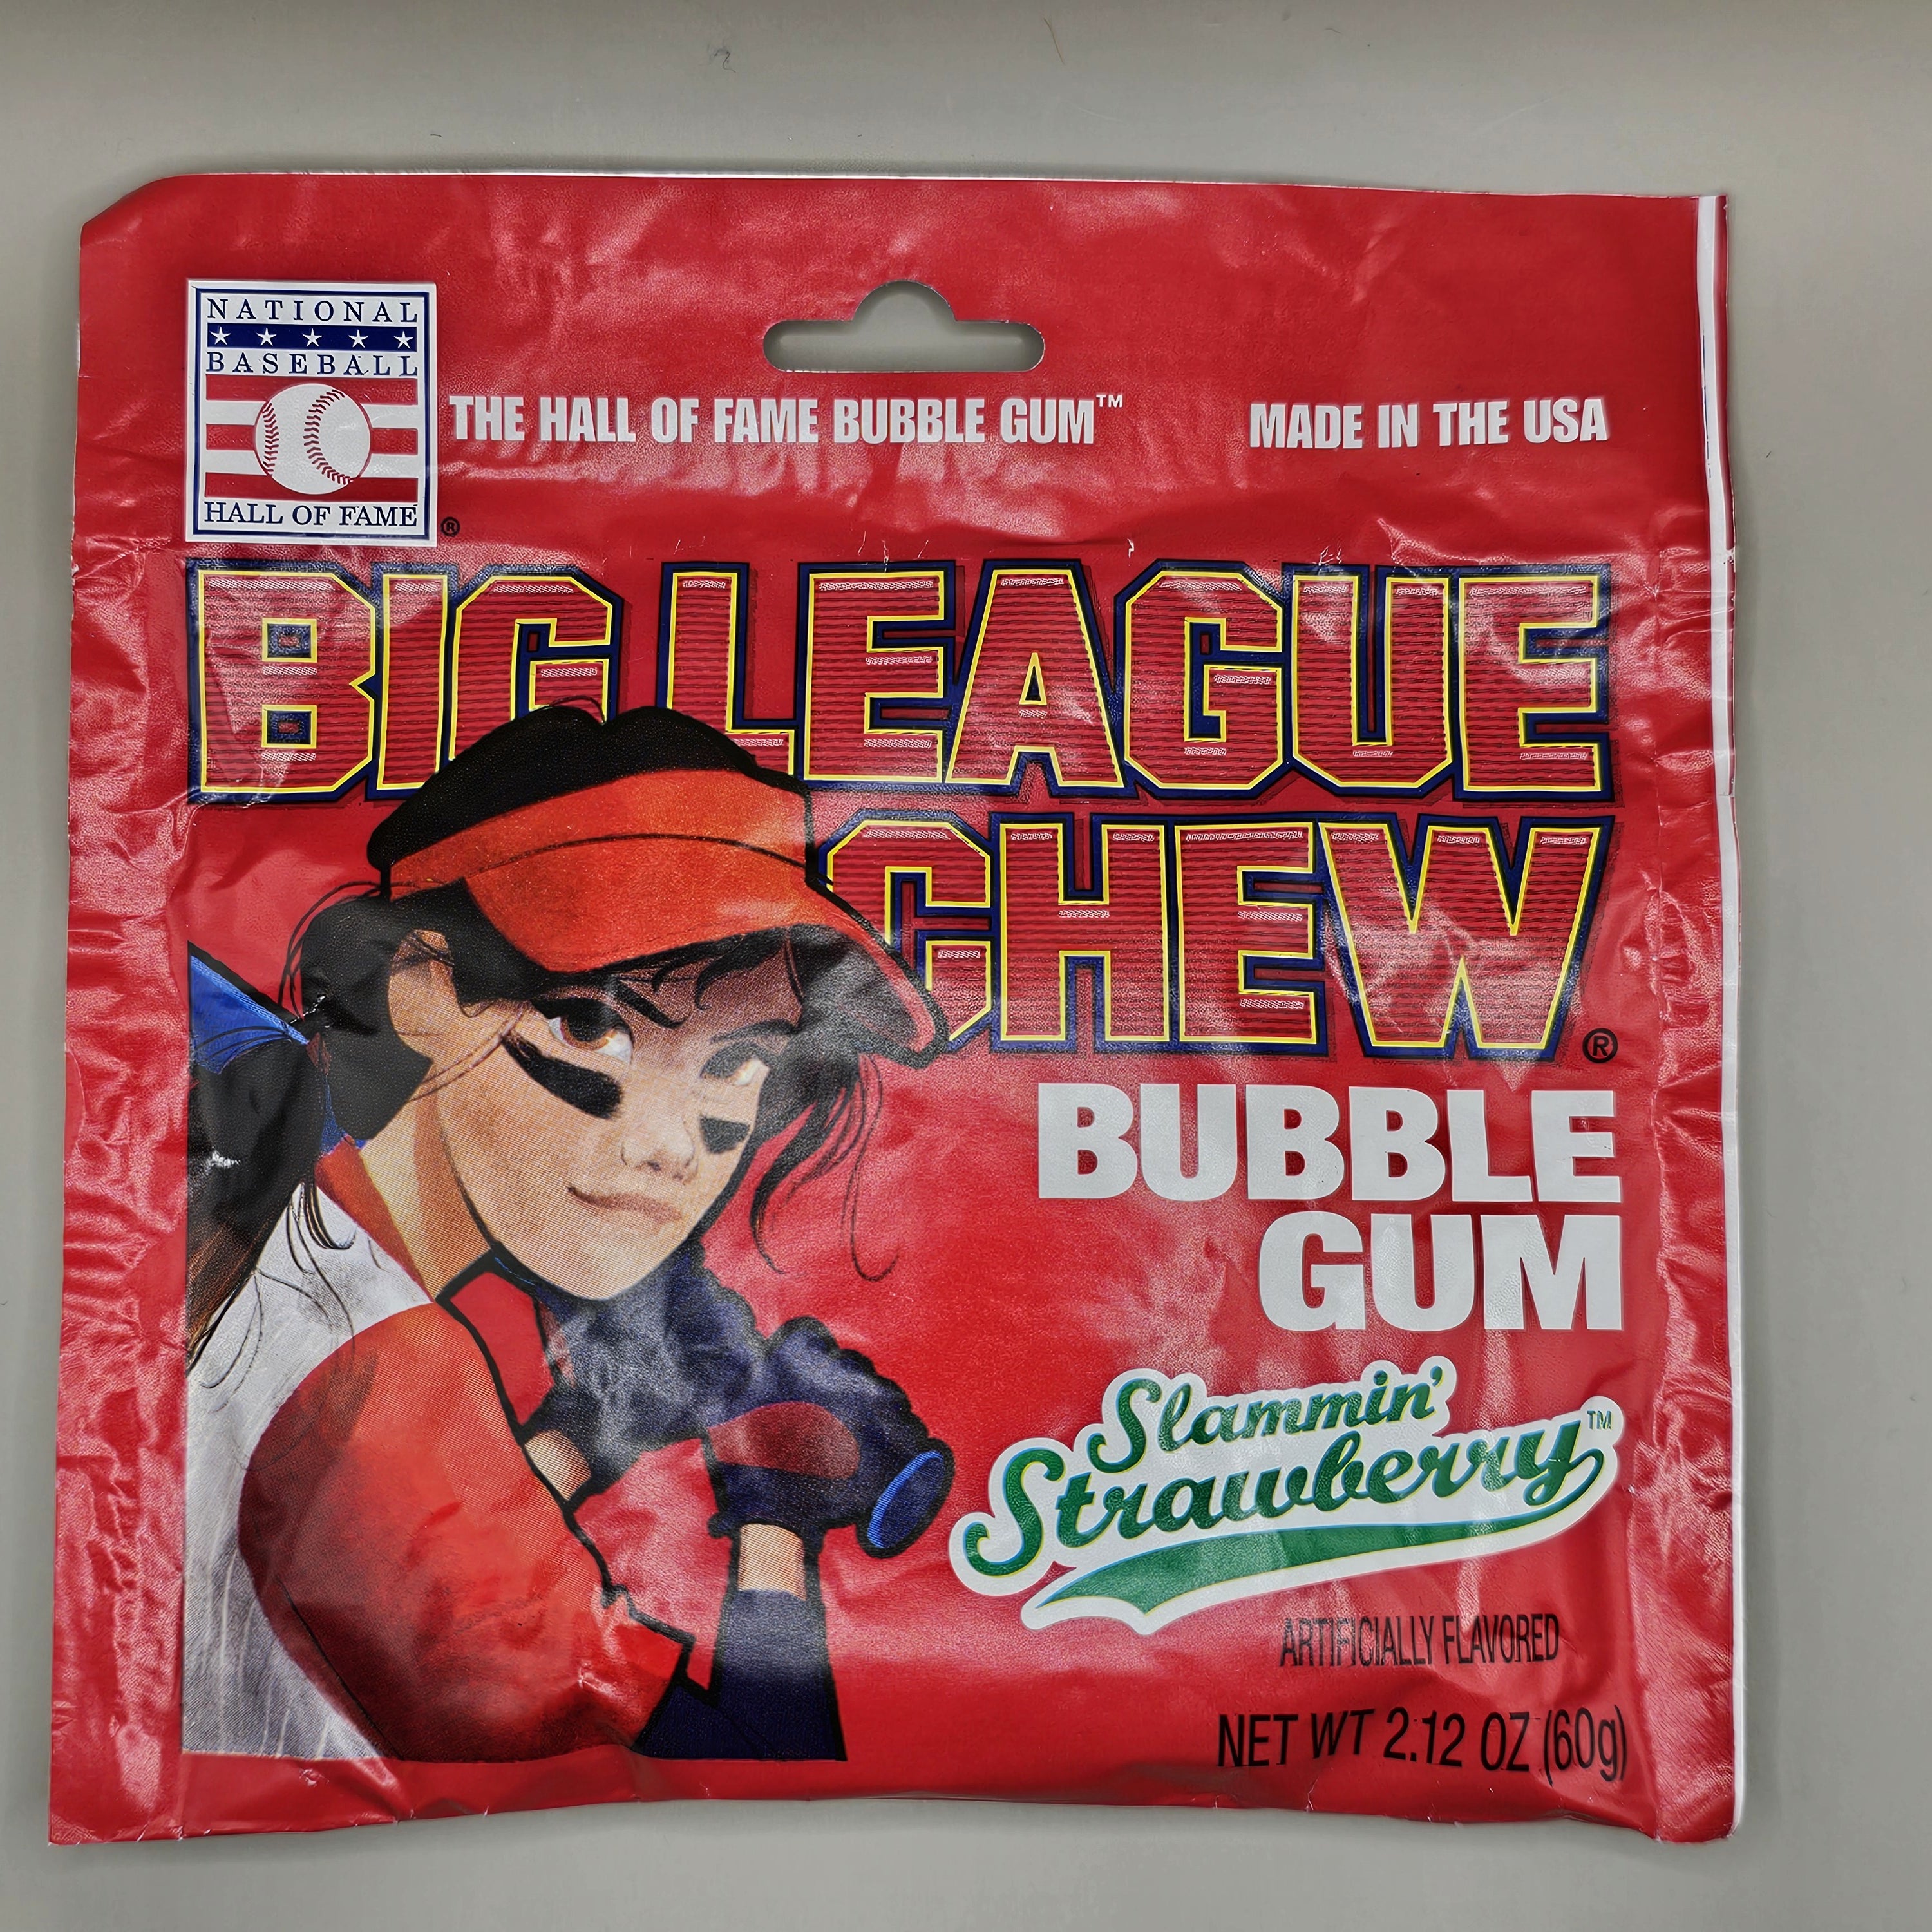 Slammin' strawberry big league chew.